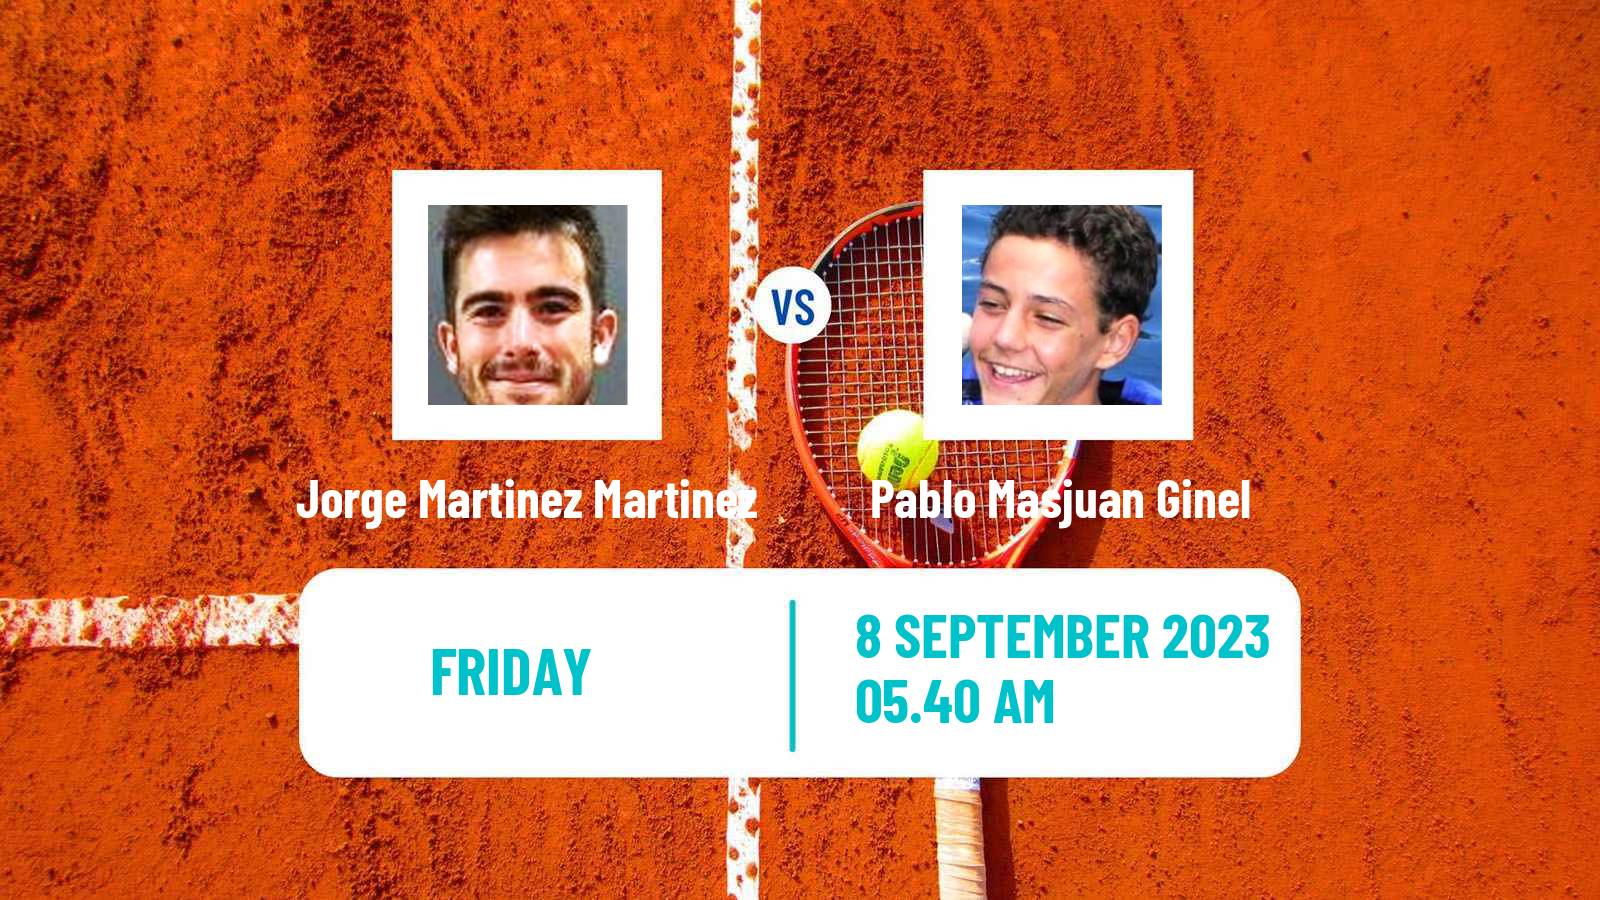 Tennis ITF M15 Madrid Men Jorge Martinez Martinez - Pablo Masjuan Ginel